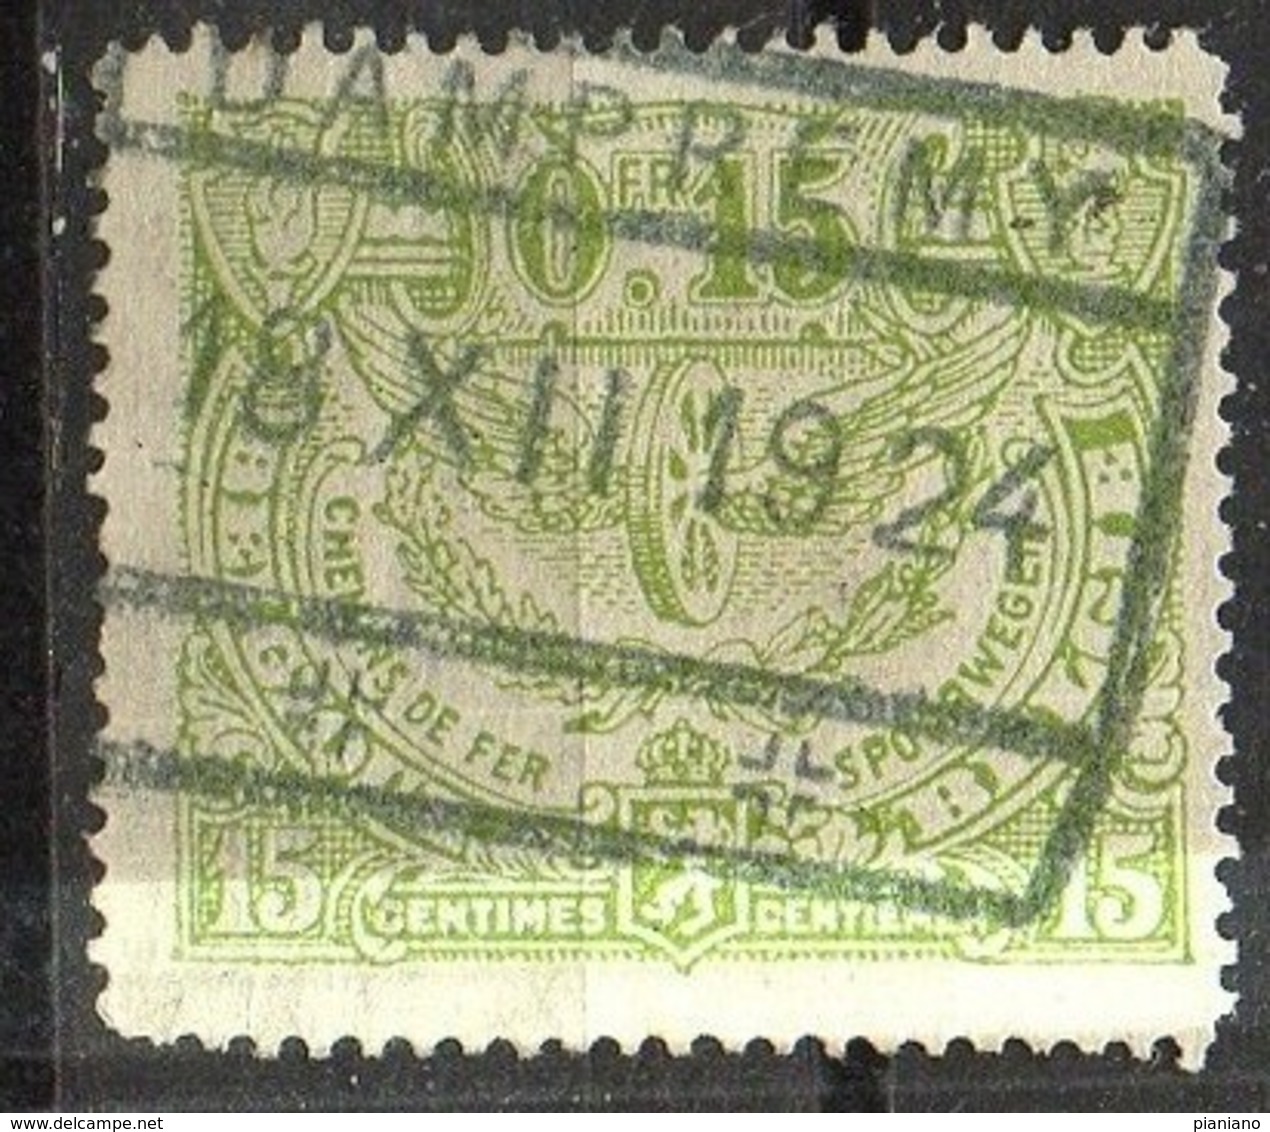 PIA - BEL -  1920-21-  Francobollo Per Pacchi Postali  -  (Yv Pacchi 101) - Reisgoedzegels [BA]